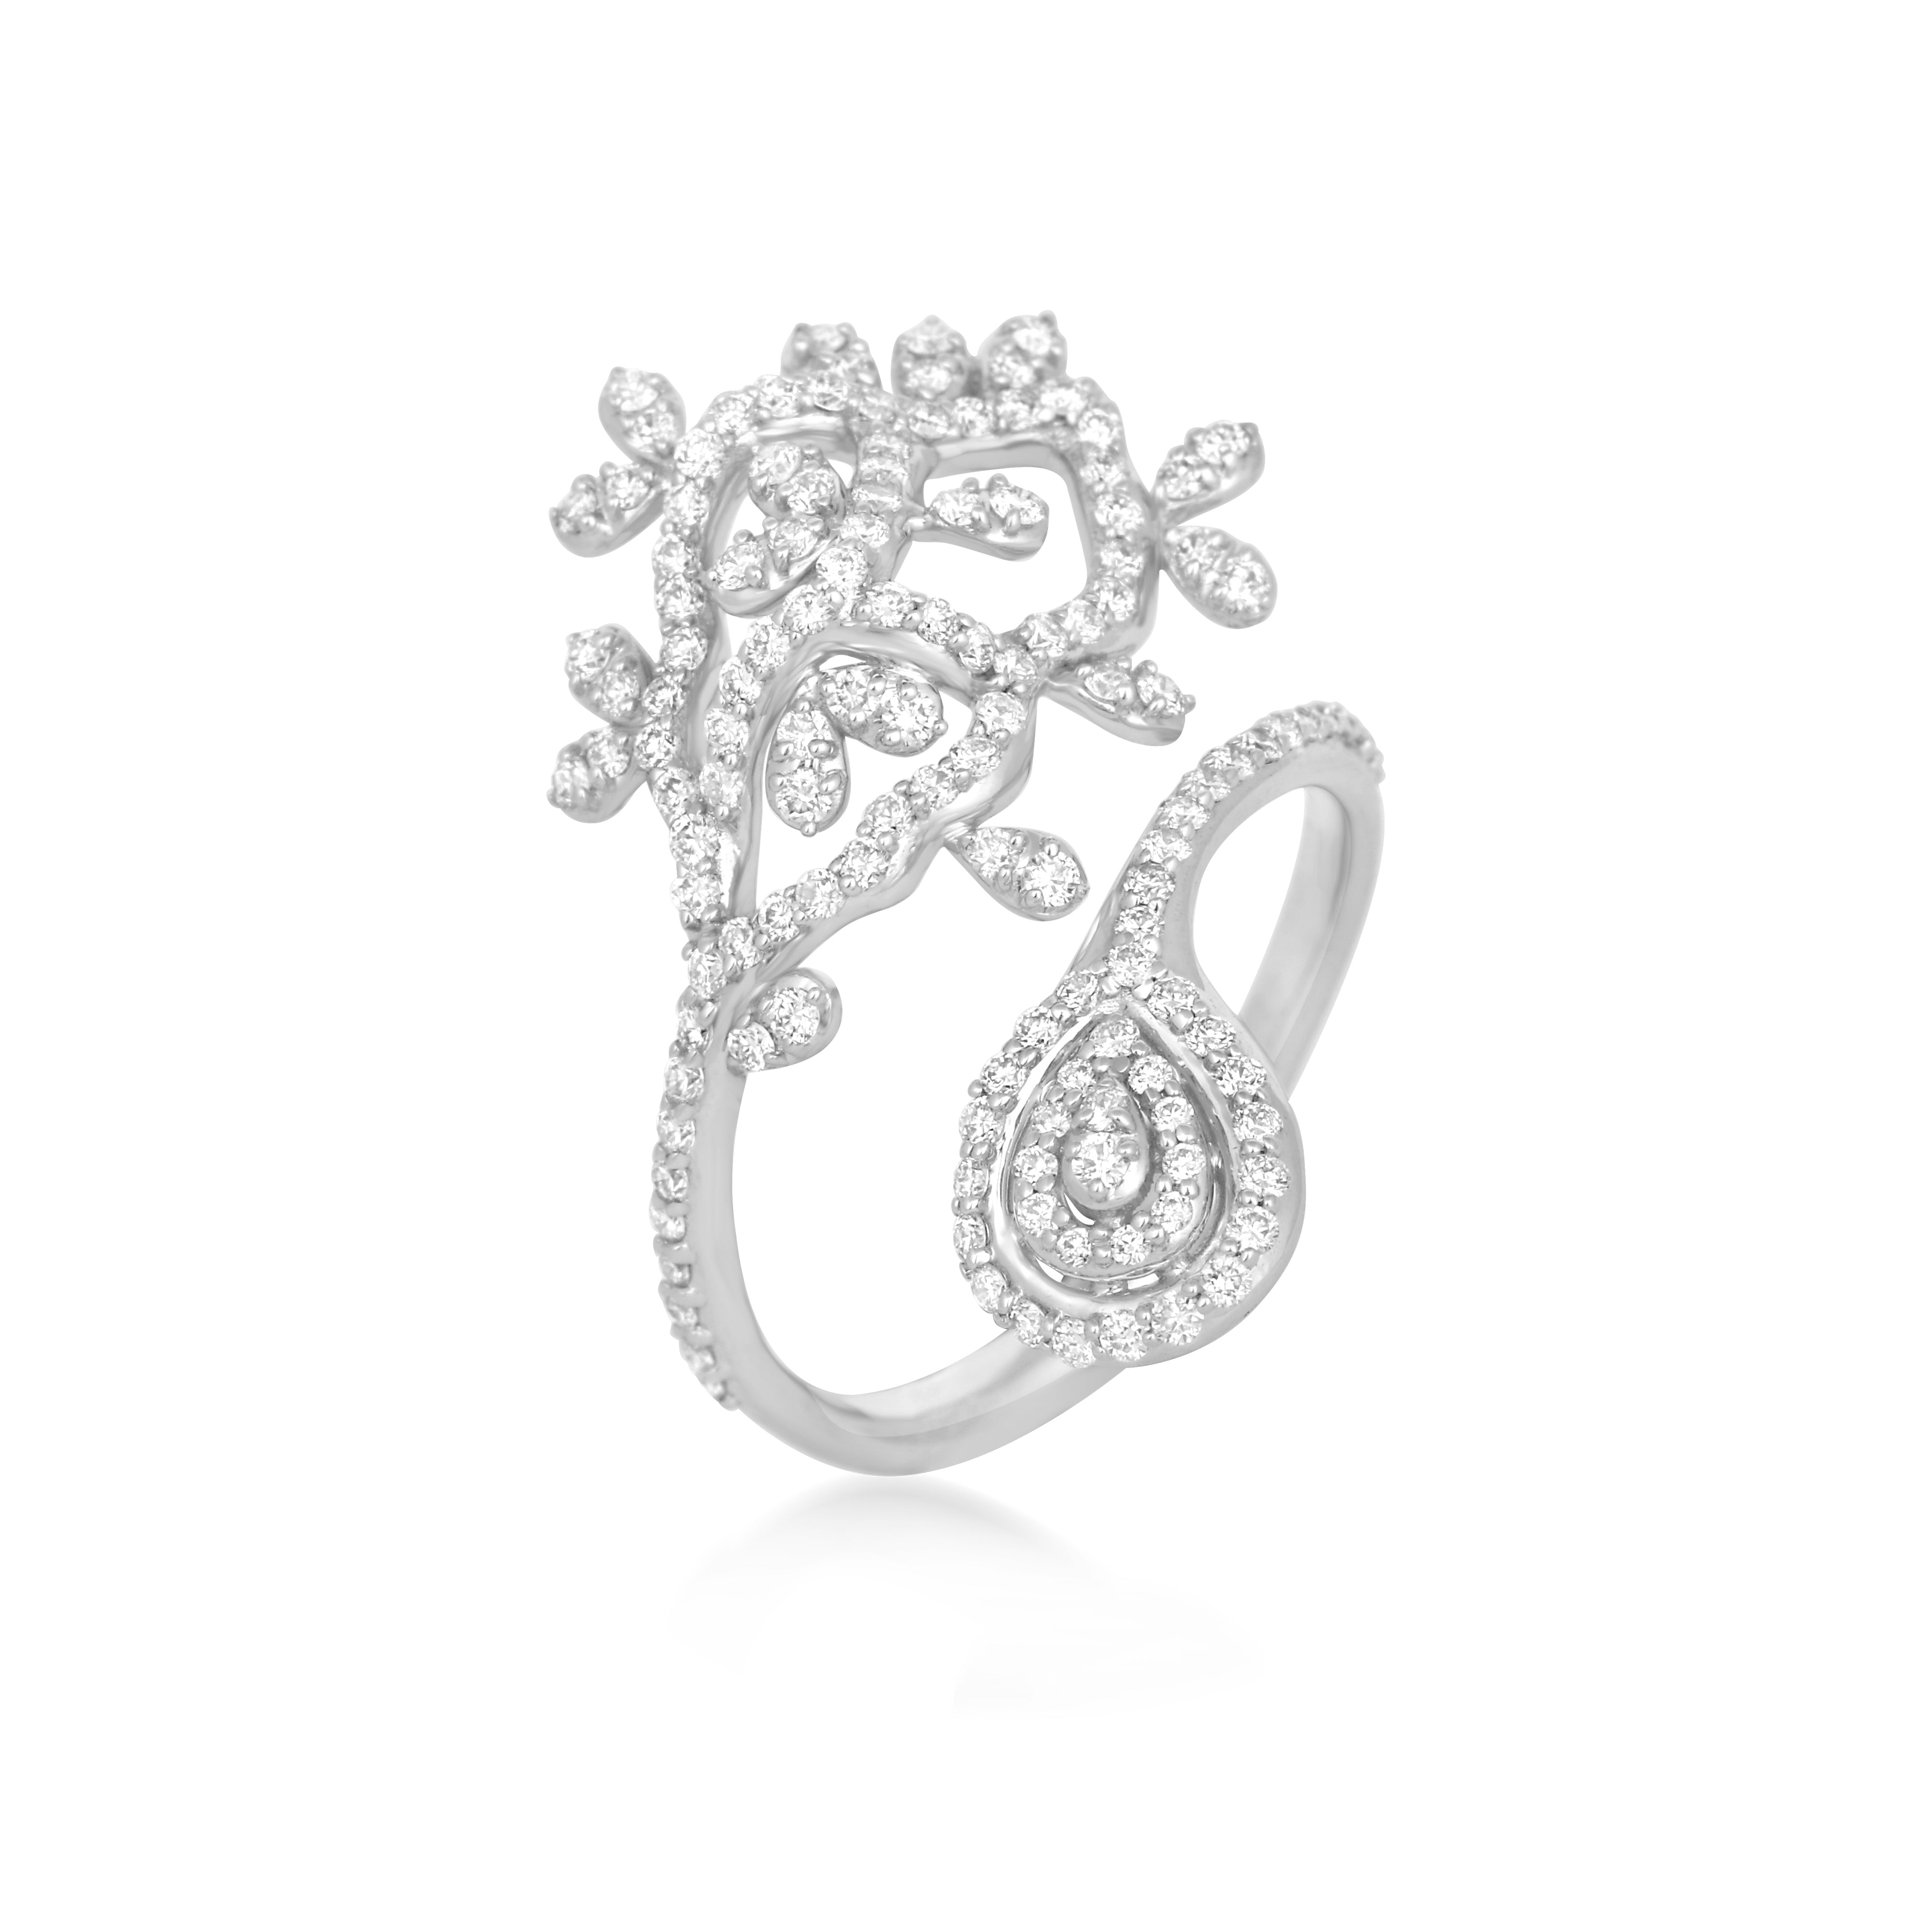 Buy Love Heart Shaped Ring Online in India | Kasturi Diamond | Heart shaped  rings, Gold rings fashion, Diamond rings design